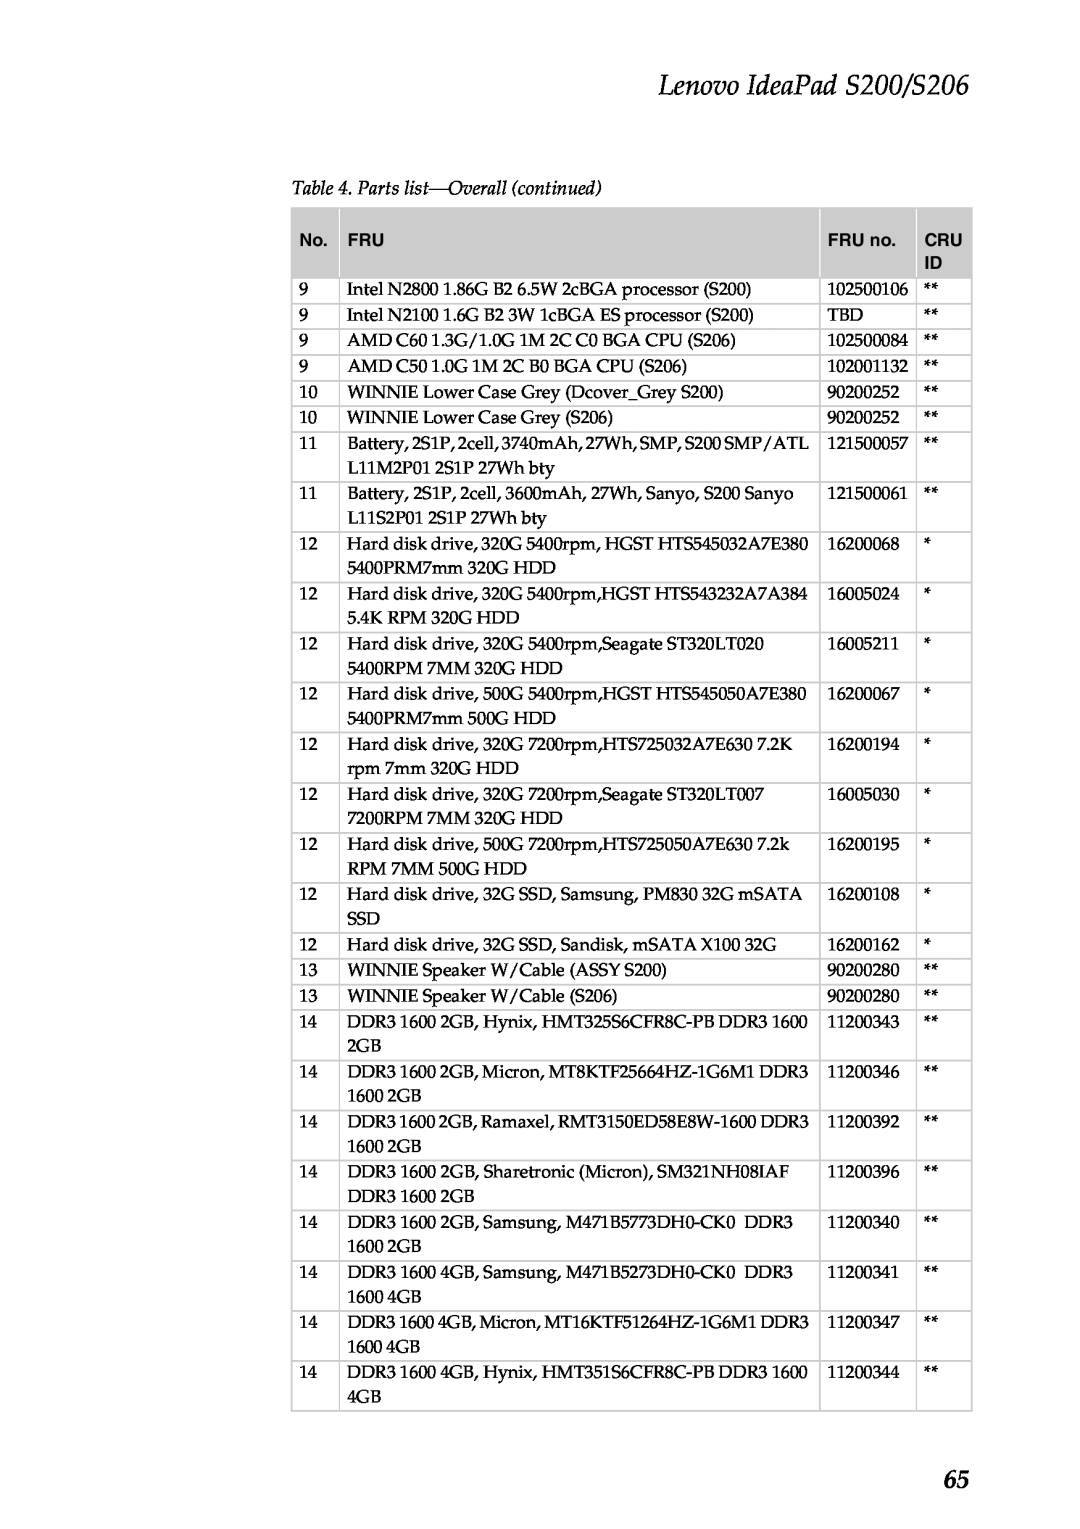 Lenovo manual Parts list-Overallcontinued, Lenovo IdeaPad S200/S206, FRU no 